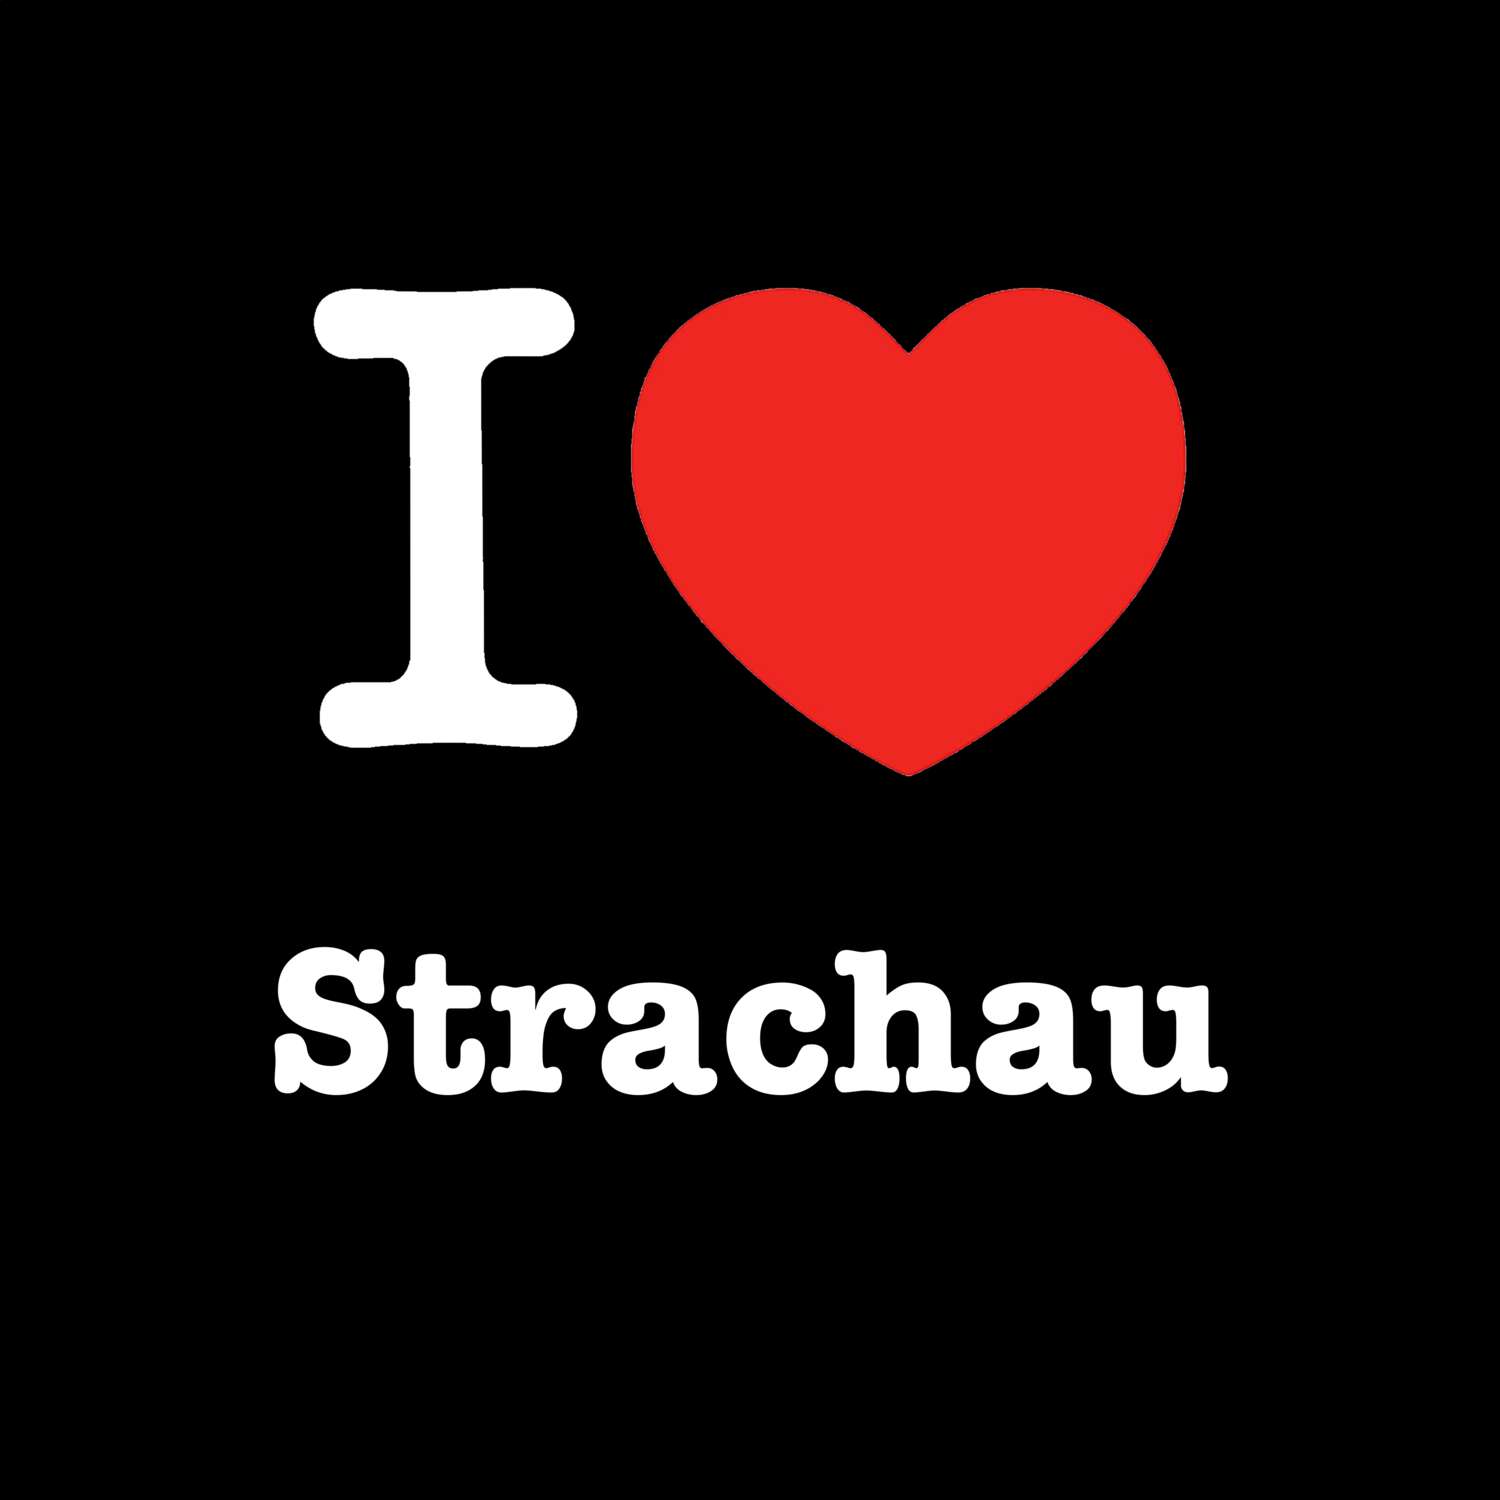 Strachau T-Shirt »I love«